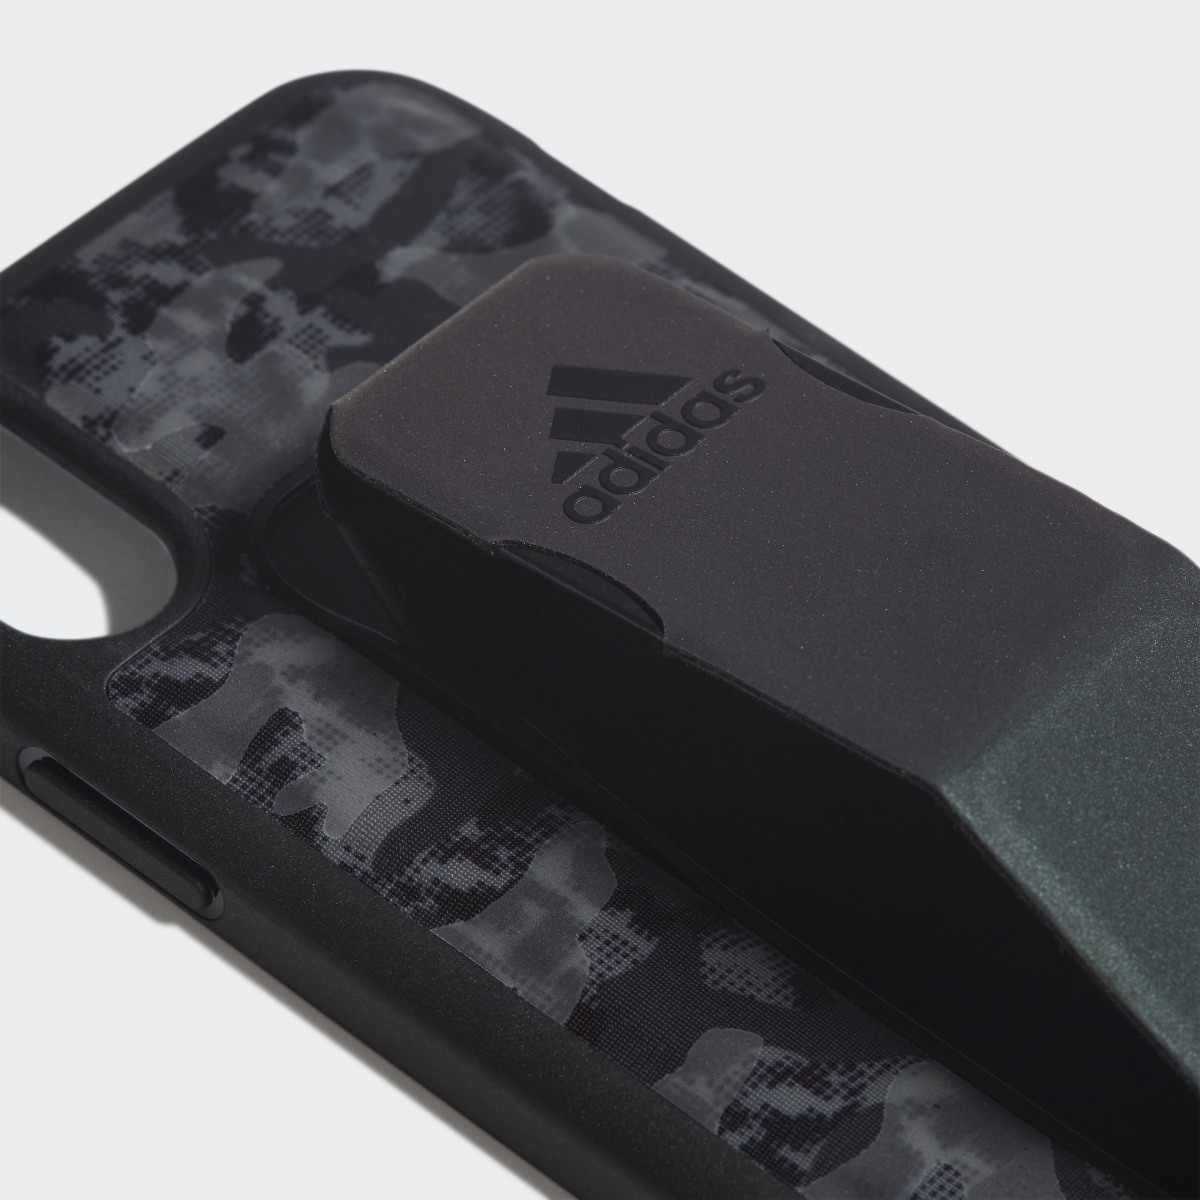 Adidas Grip Case iPhone X. 5